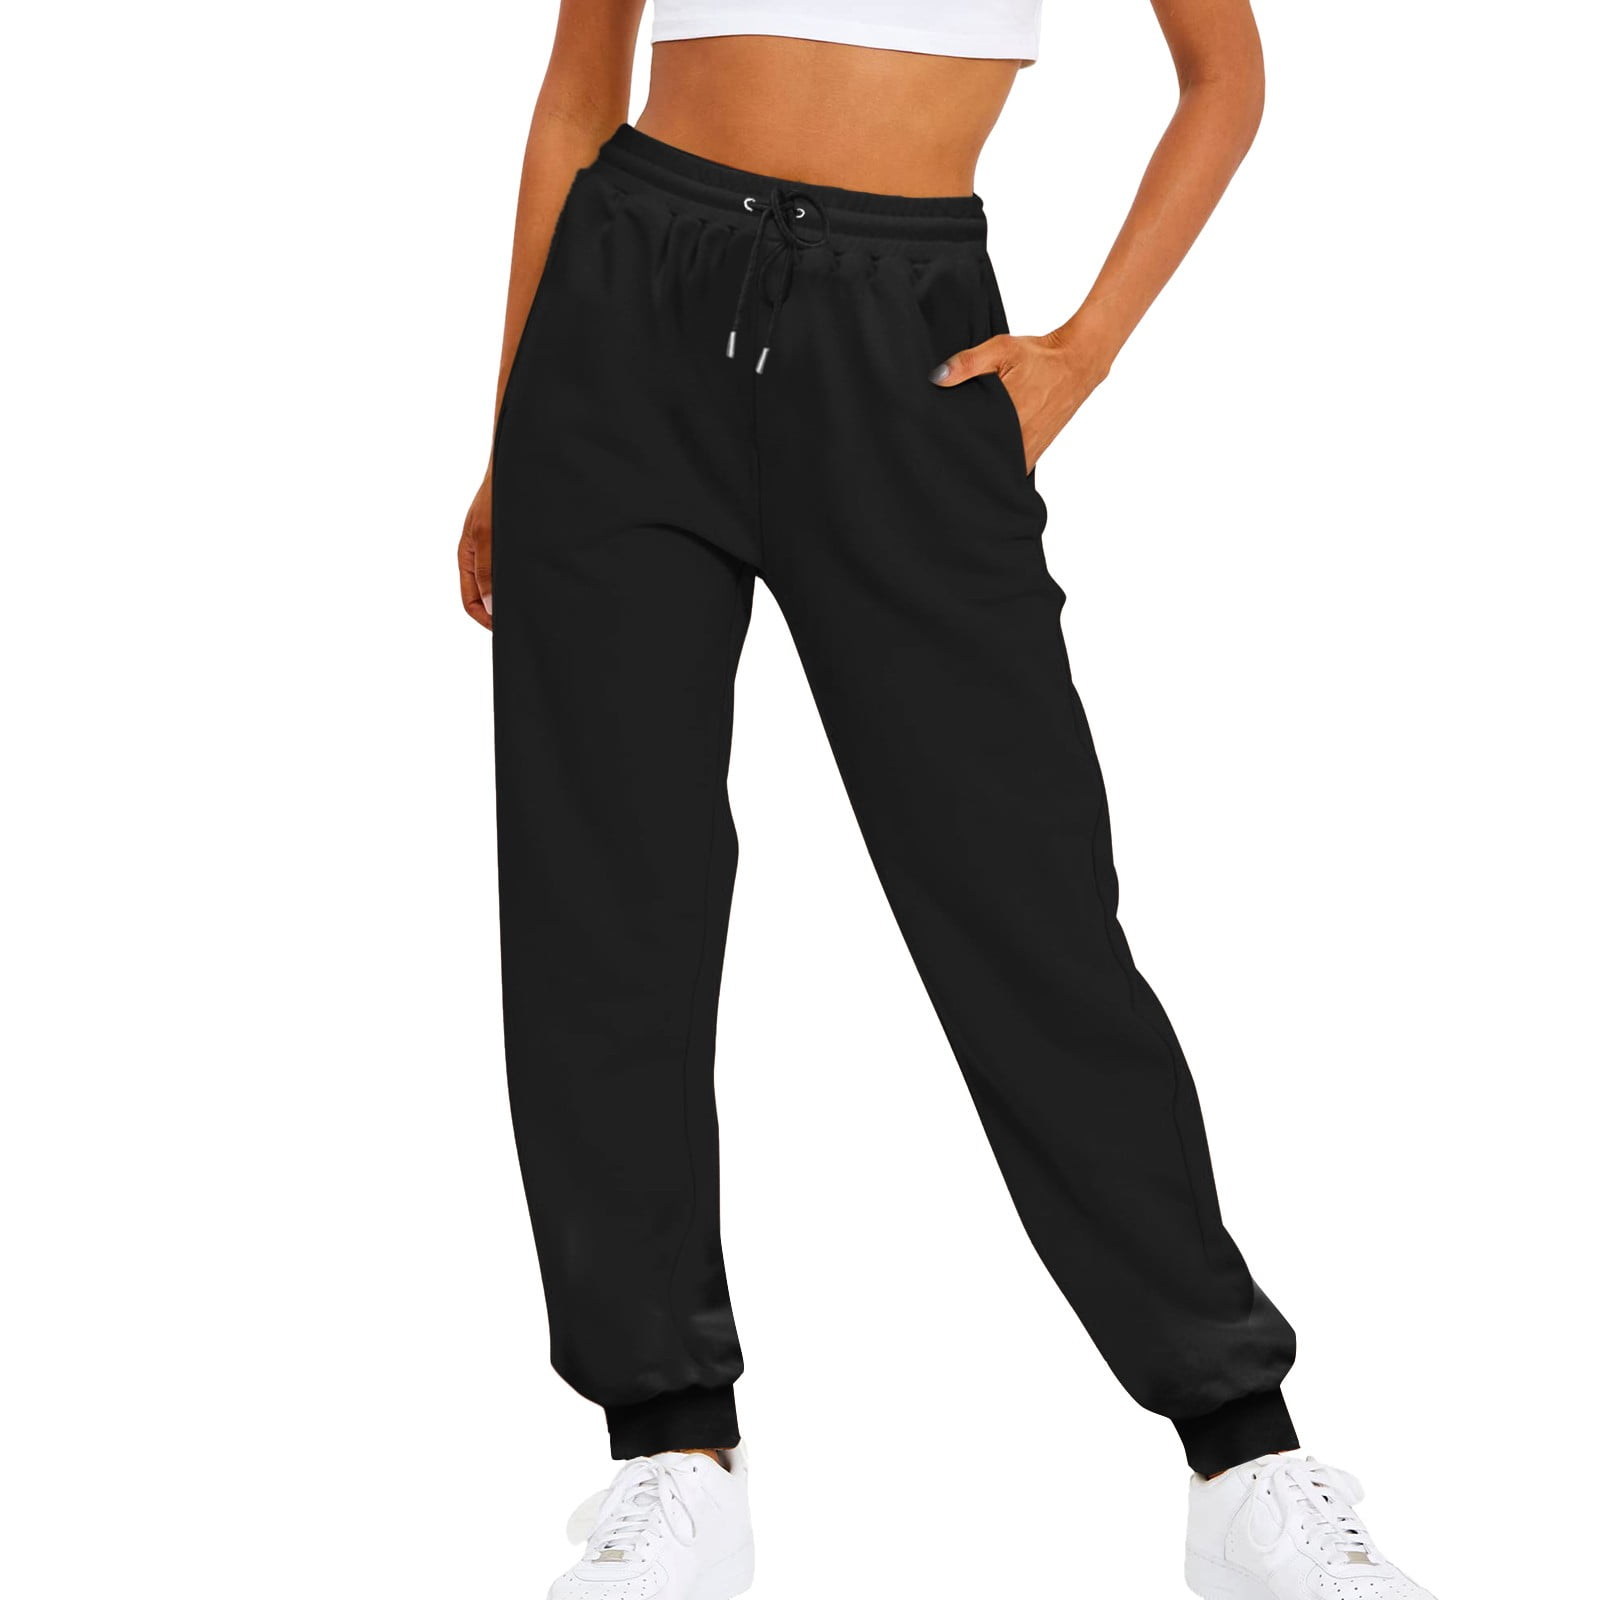 Sweatpants for Women Petite Length Gibobby Women's Comfy Stretch